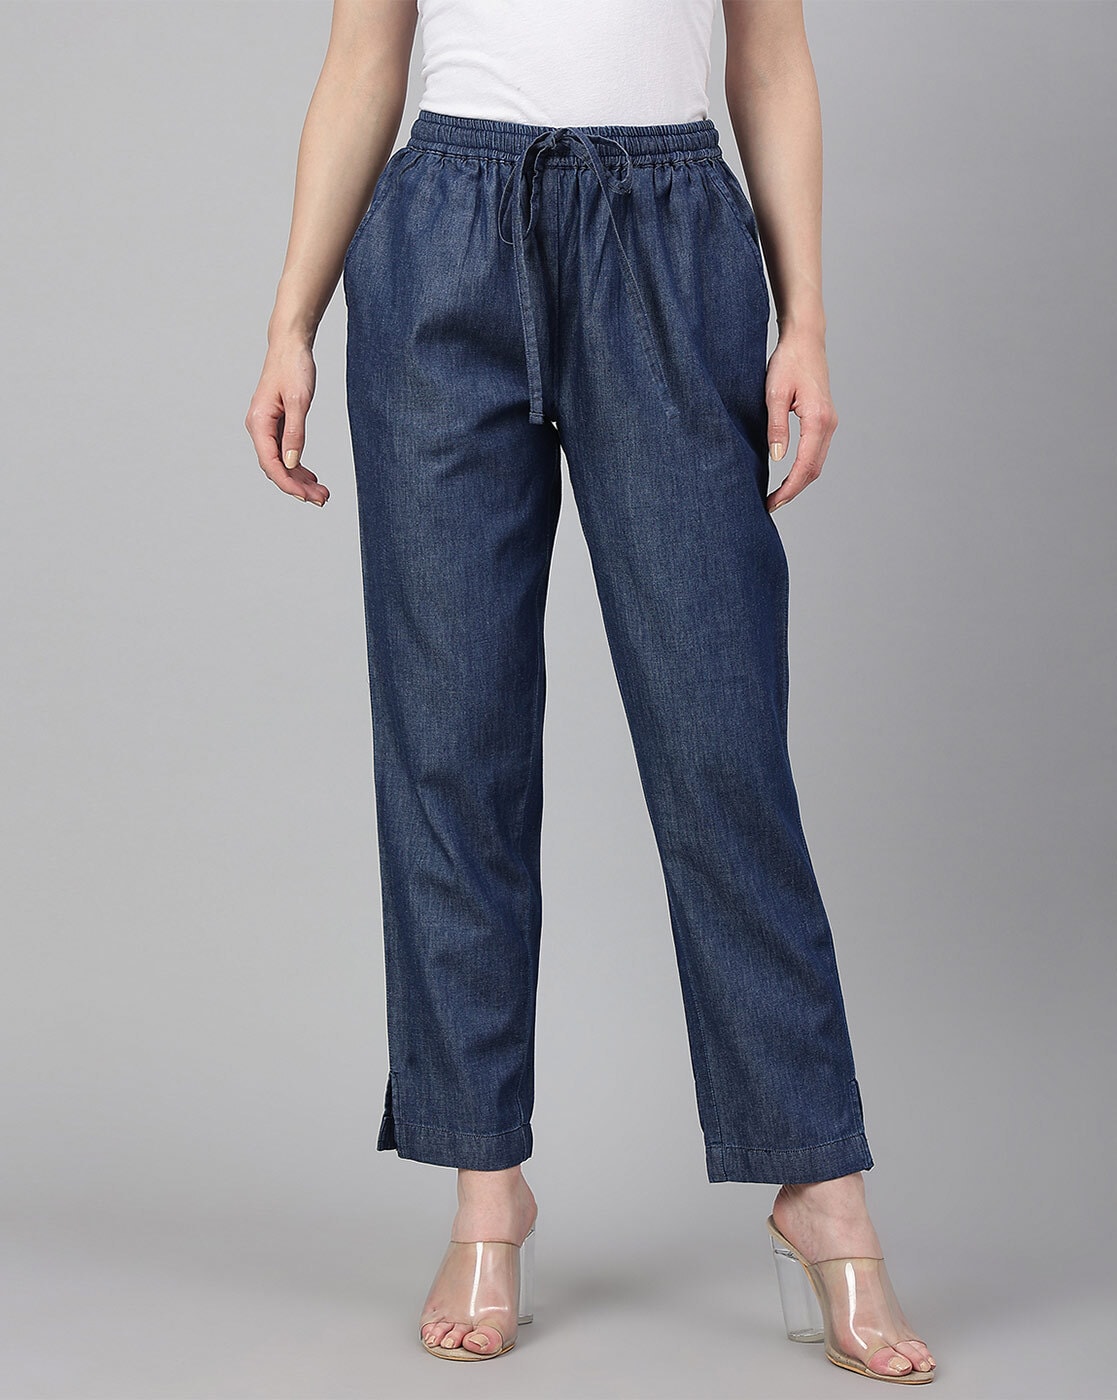 Amazon.com: ZHIZAIHU Kids Girl's Blue Jeans Elastic Waist Wide Leg Jeans  Children Baggy Pants Casual Denim Pants 2~12 Years (Blue, 2-3 Years):  Clothing, Shoes & Jewelry